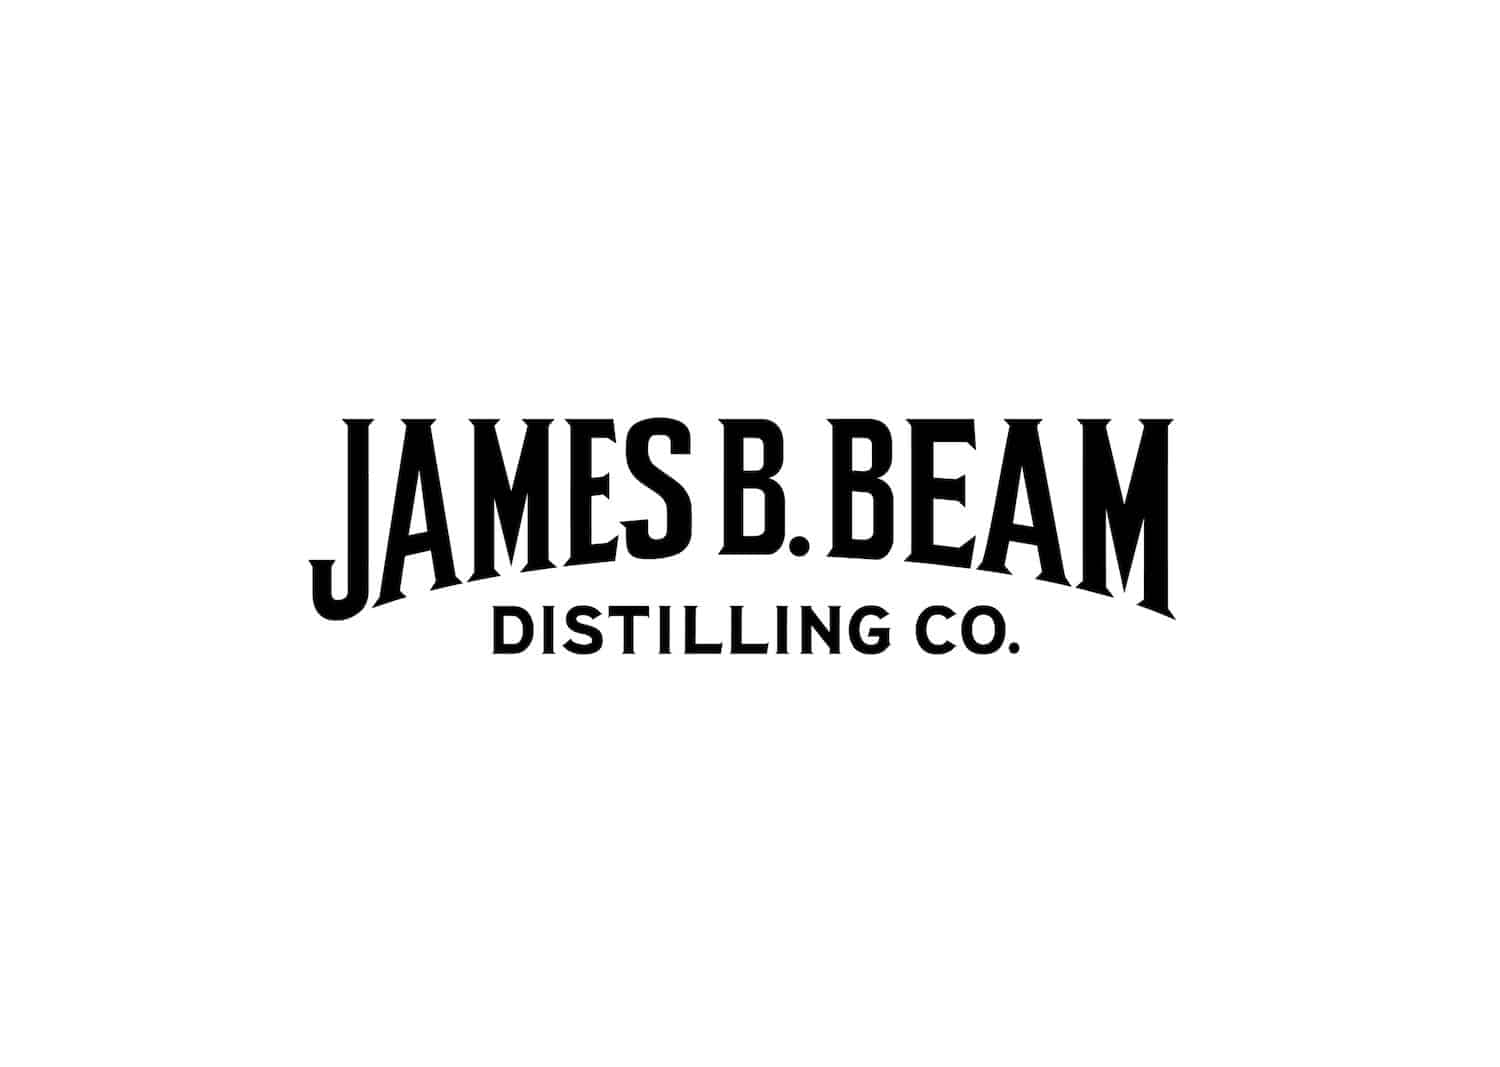 James B. Beam Distilling Co. logo